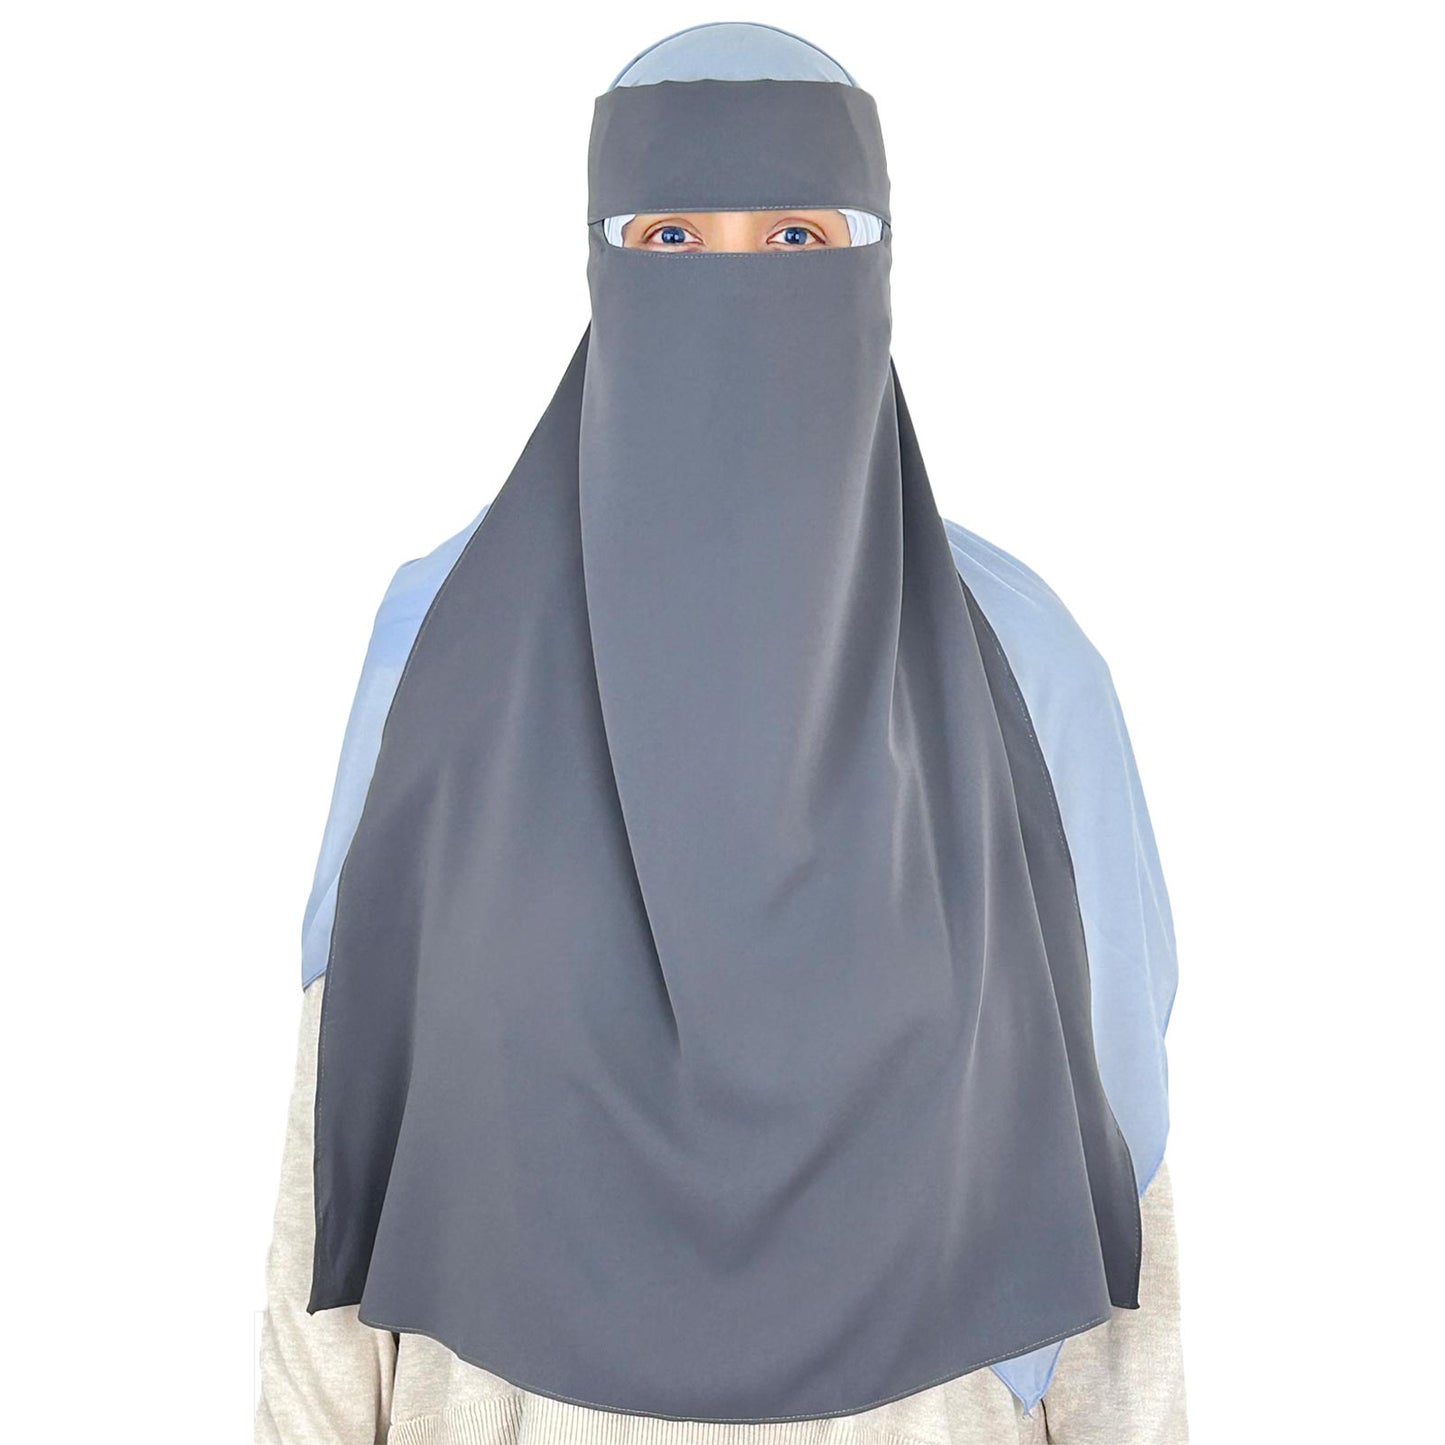 extra long gray niqab for muslim women